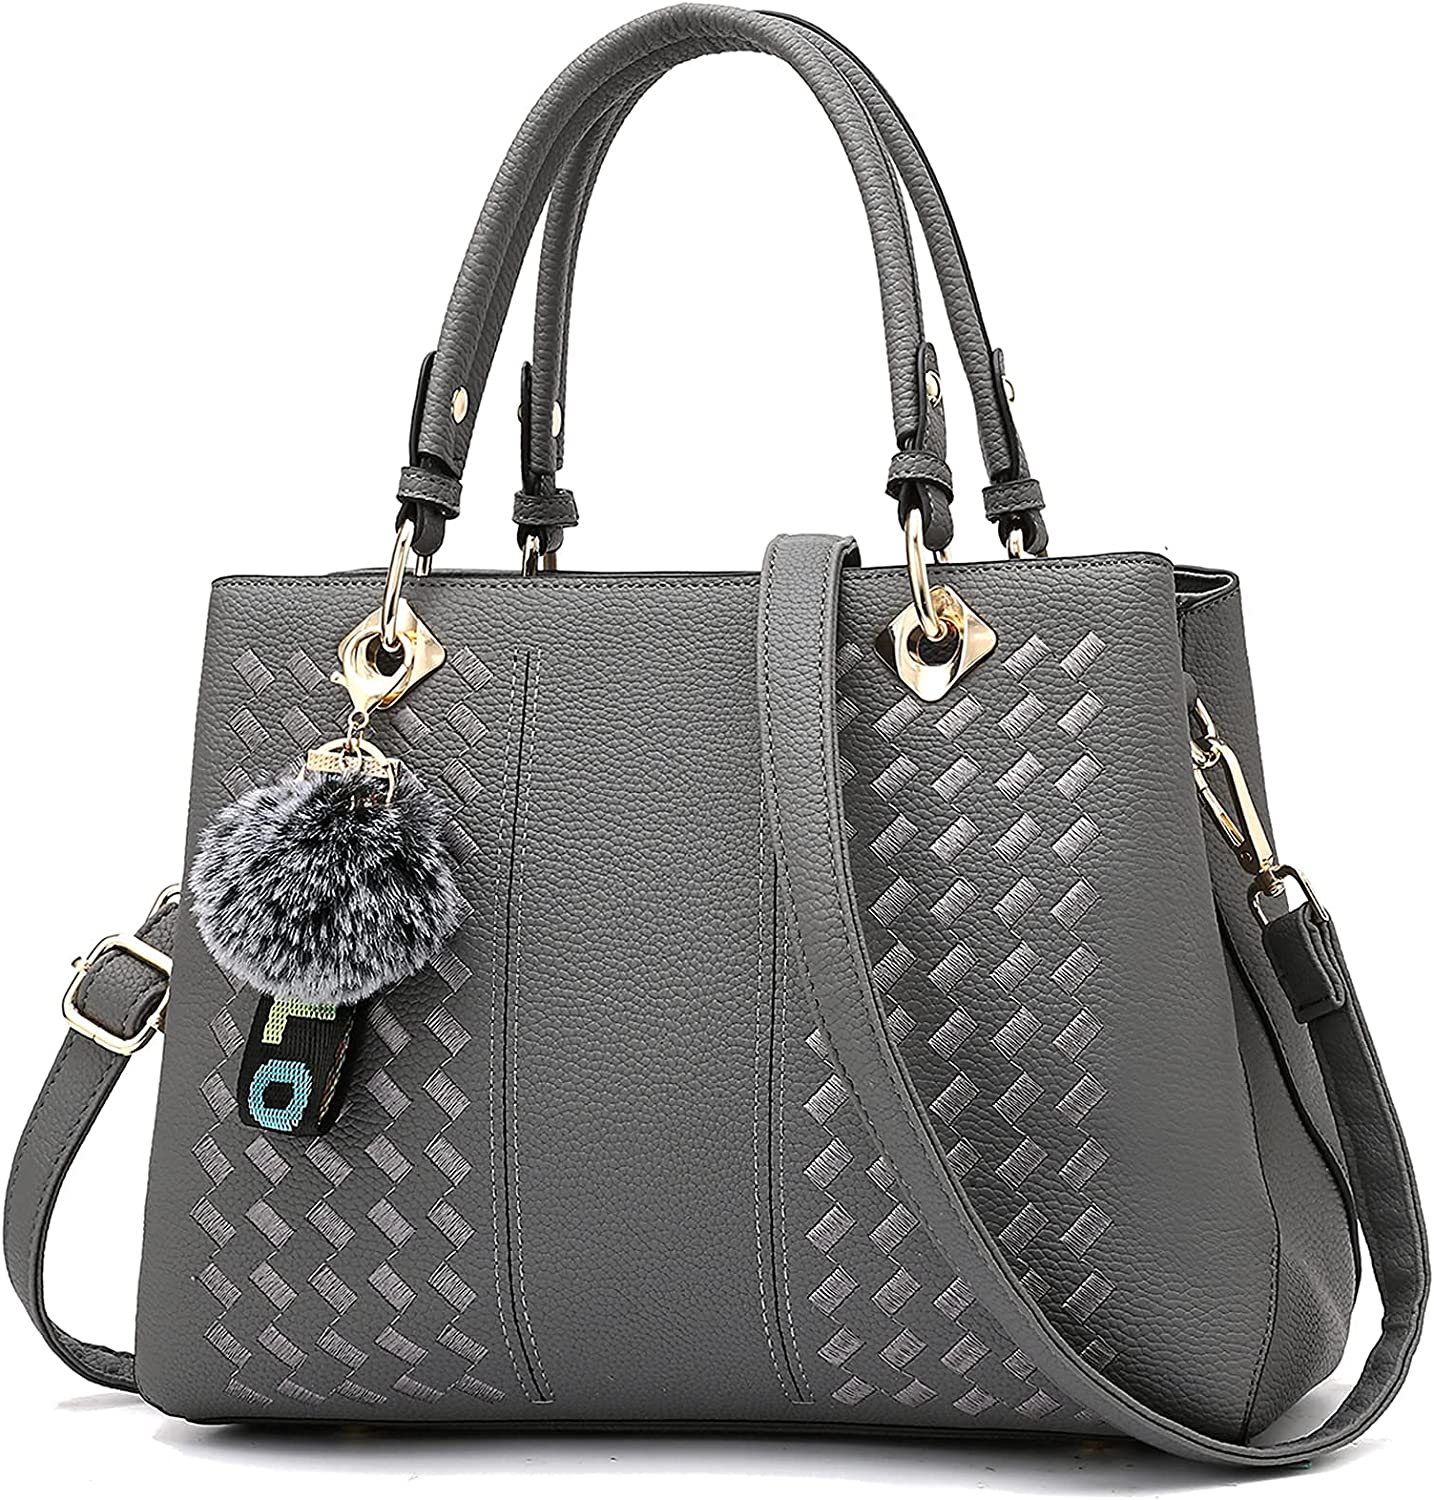 SYKT Satchel Purses and Handbags for Women Shoulder Tote Bags | eBay